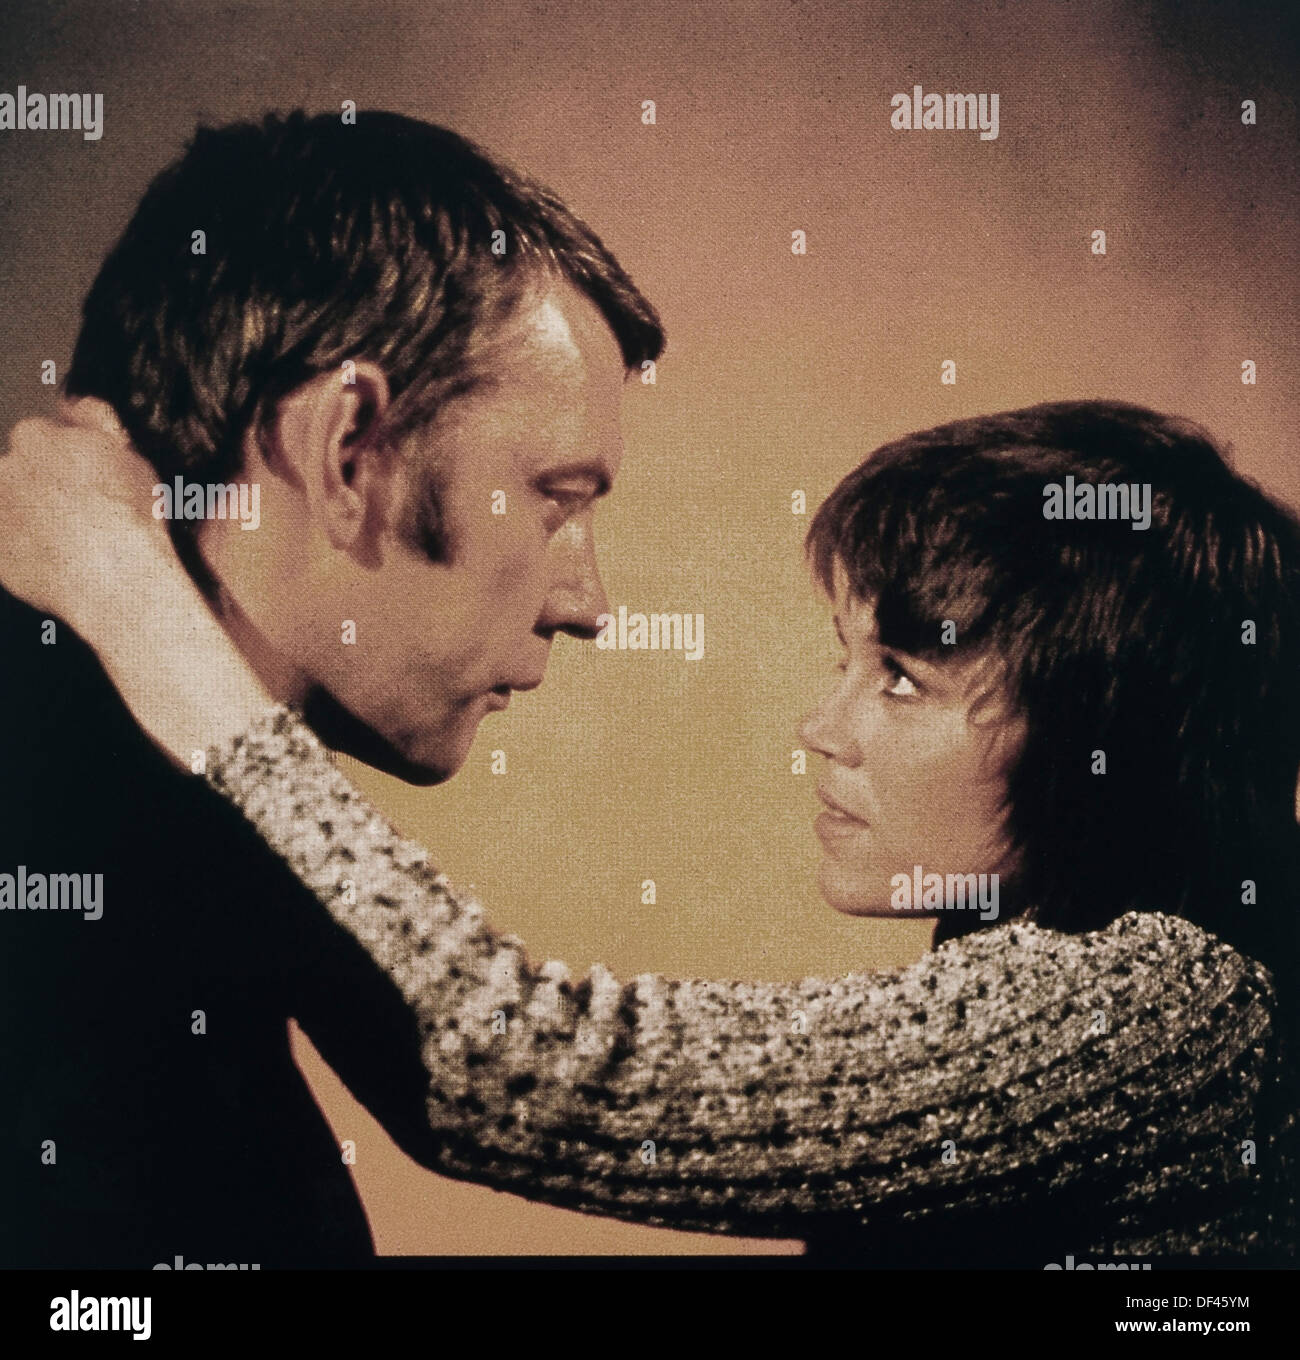 Jane Fonda und Donald Sutherland, am Set des Films "Klute", 1971 Stockfoto